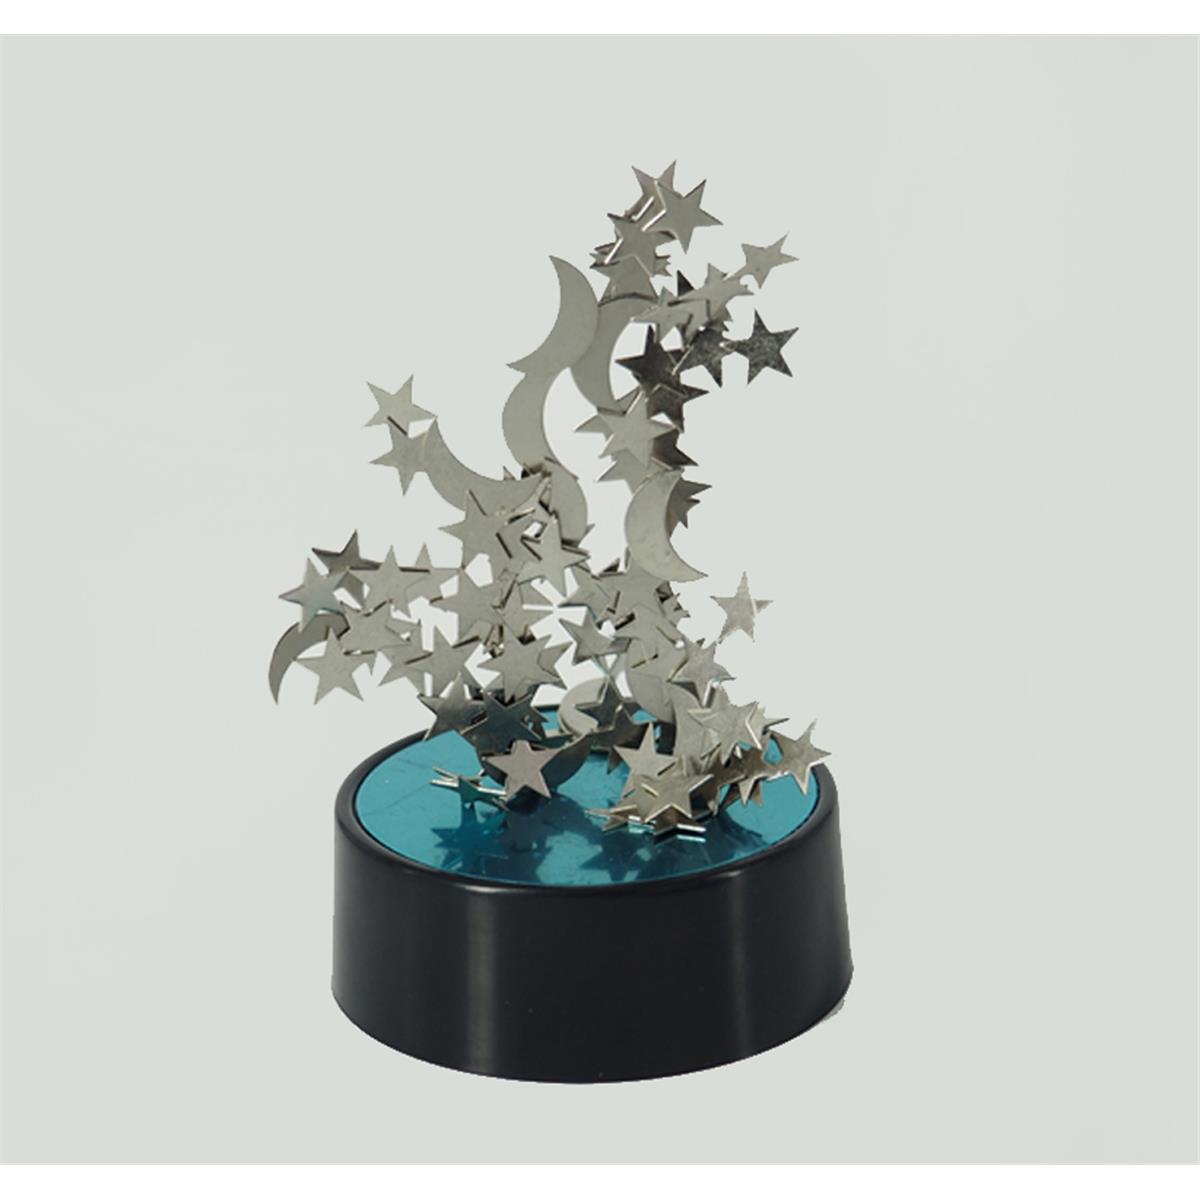 Tg101 Magnetic Desktop Sculpture, Moons & Stars